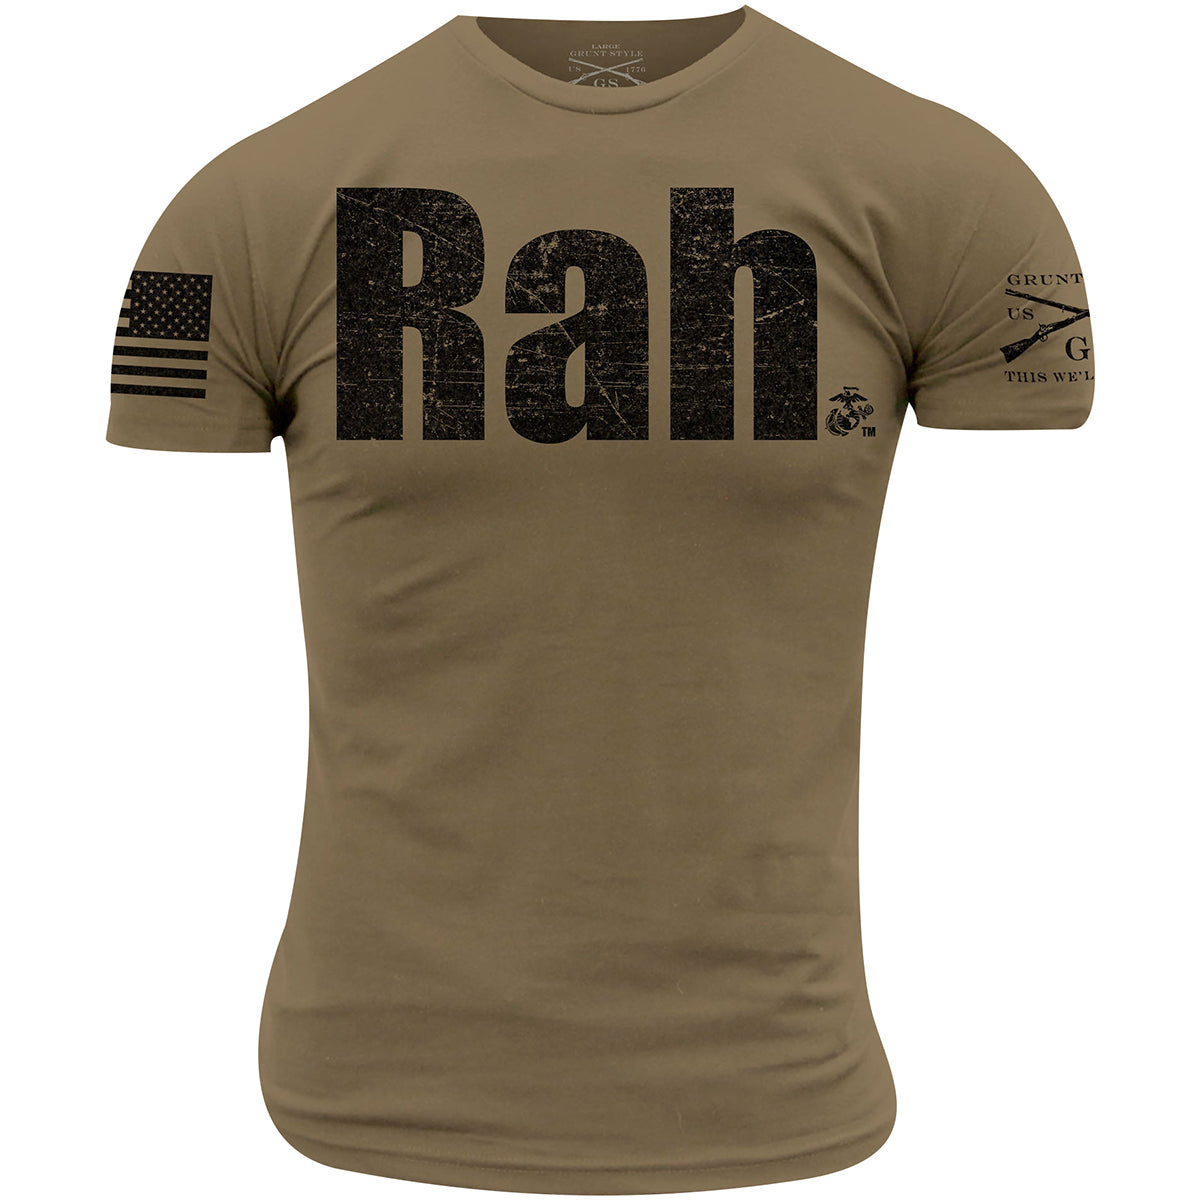 Grunt Style USMC - Rah T-Shirt - Tan Grunt Style